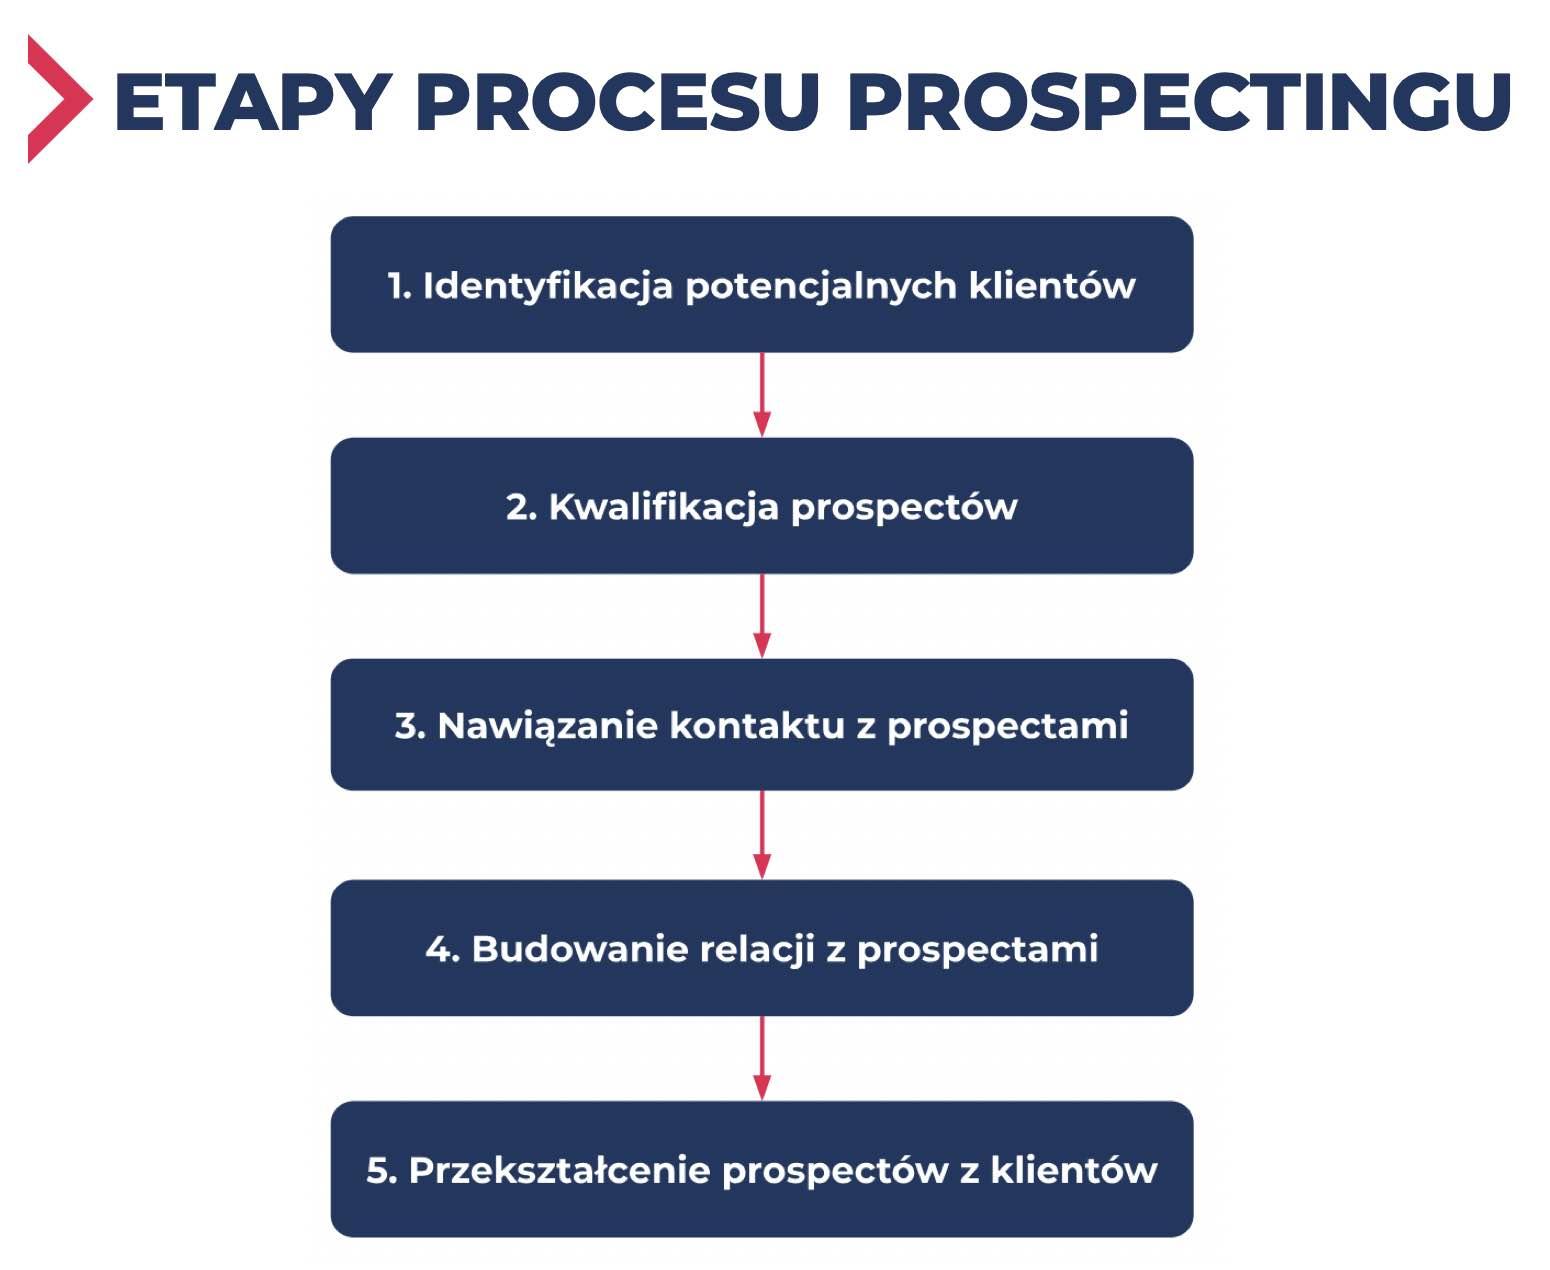 etapy procesu prospectingu – prospecting